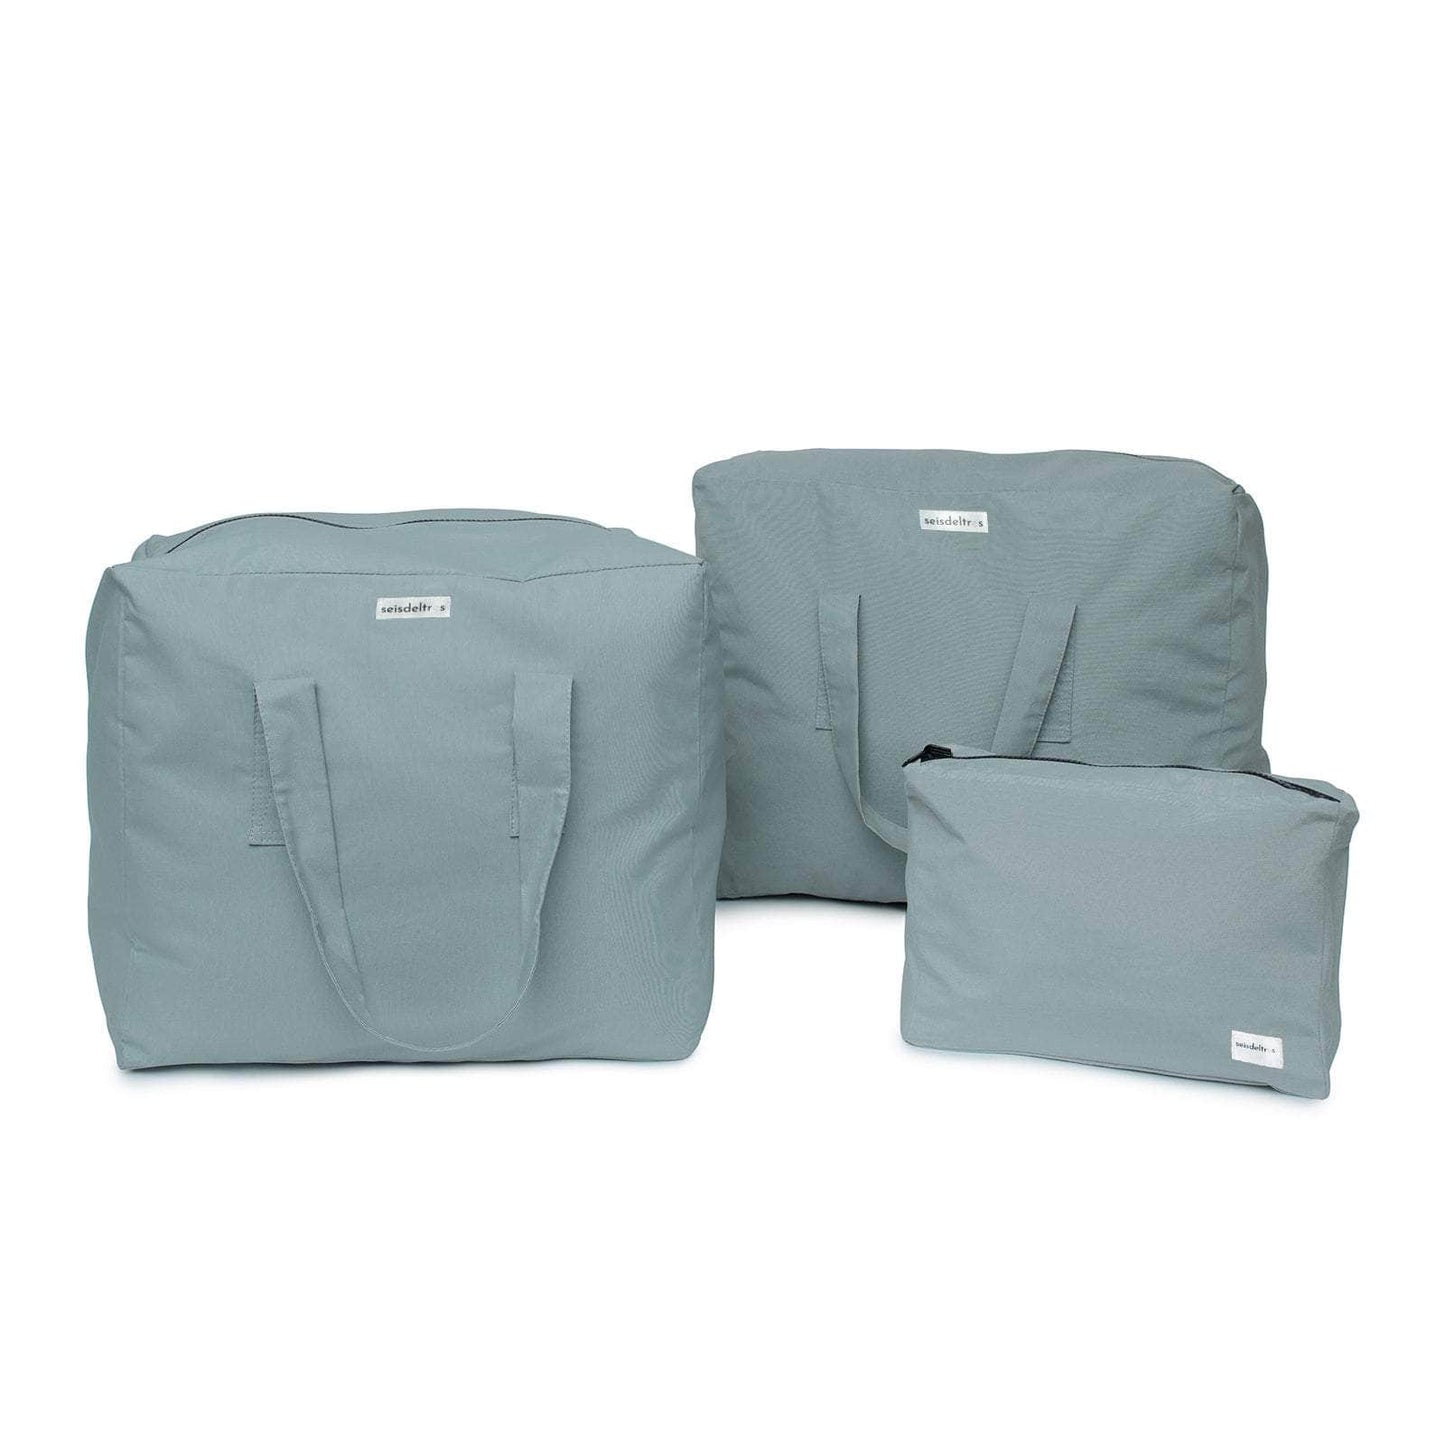 pack mybigbag Pack completo - bolsa L, bolsa XL y neceser reversible - Verde Empolvado Pack completo - bolsa L, bolsa XL y neceser reversible - Negro/Beige